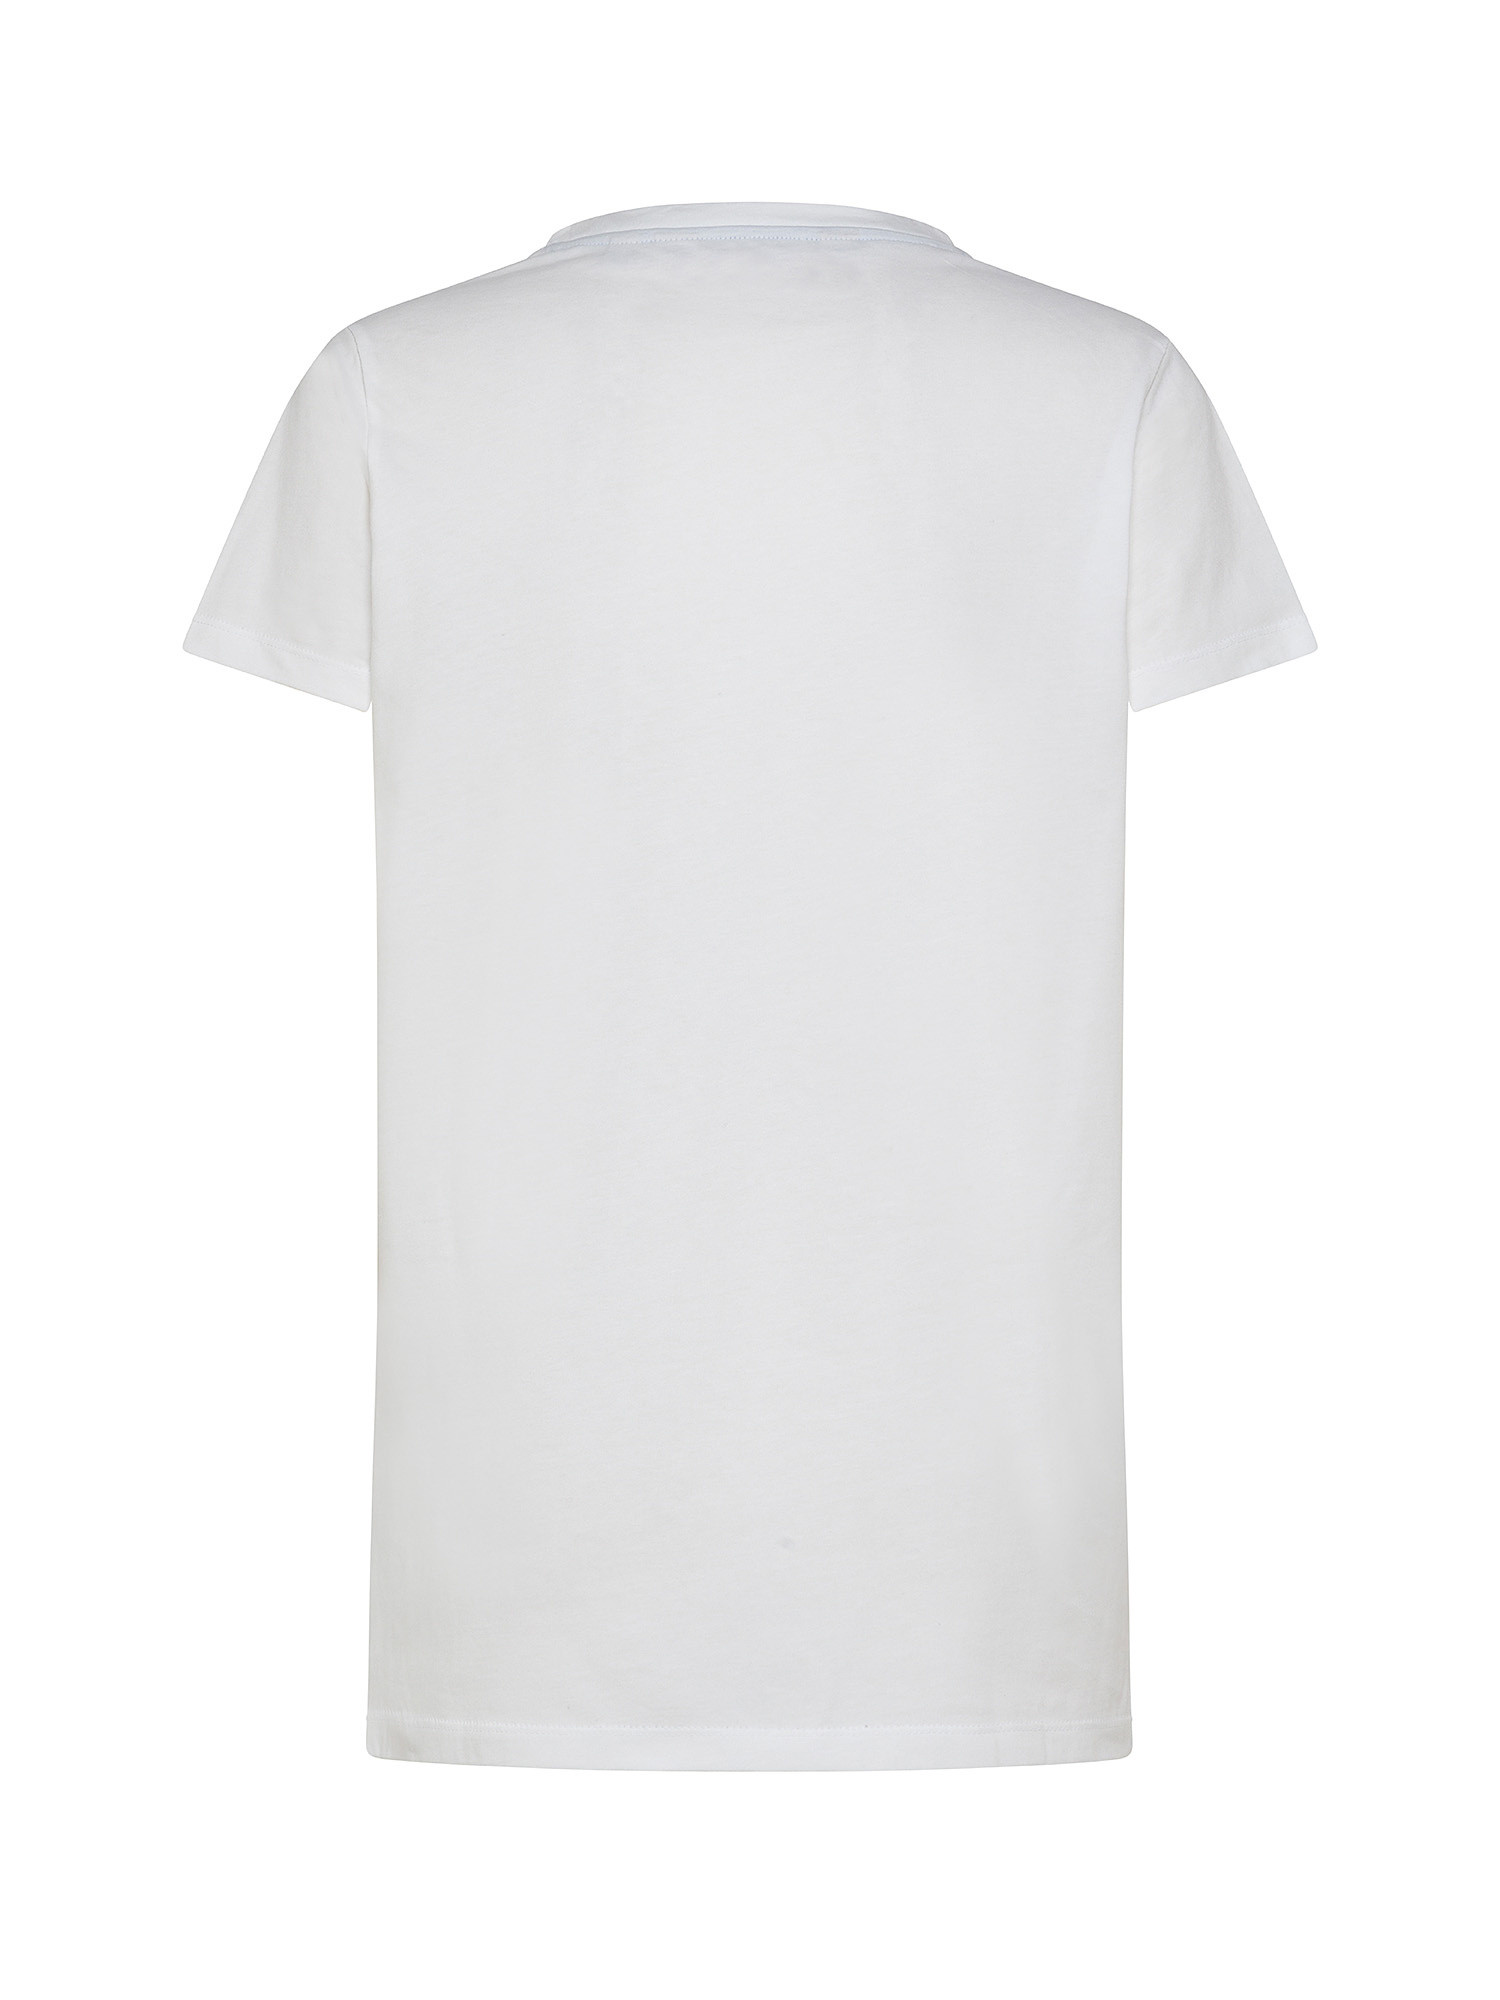 T-shirt basic puro cotone tinta unita, Bianco, large image number 1